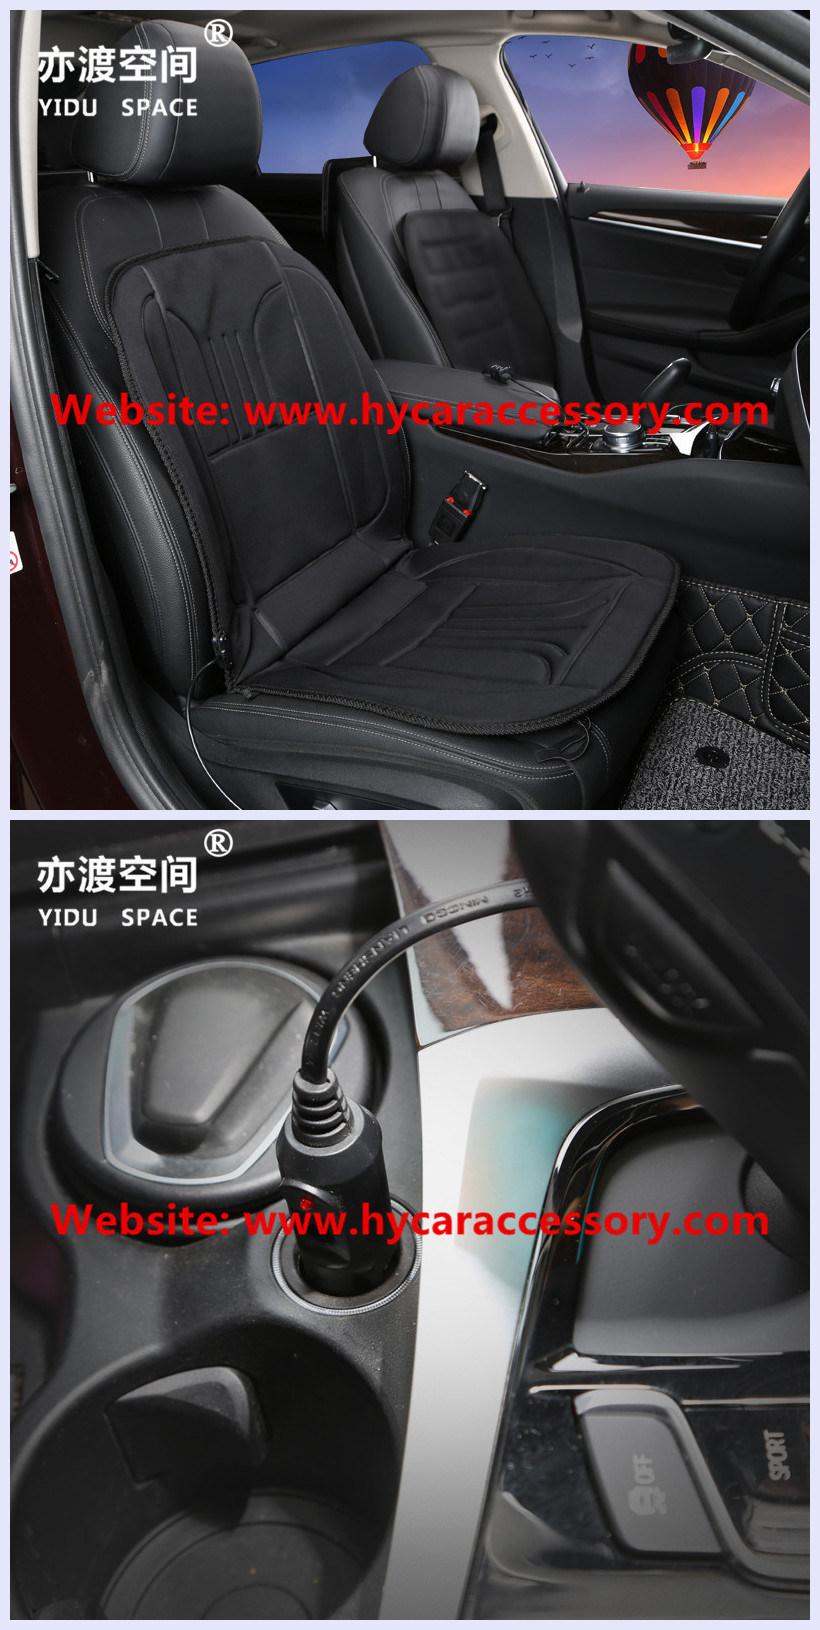 Wholesale 12V Fireproof Cigarette Lighter Universal Heated Car Seat Cushion